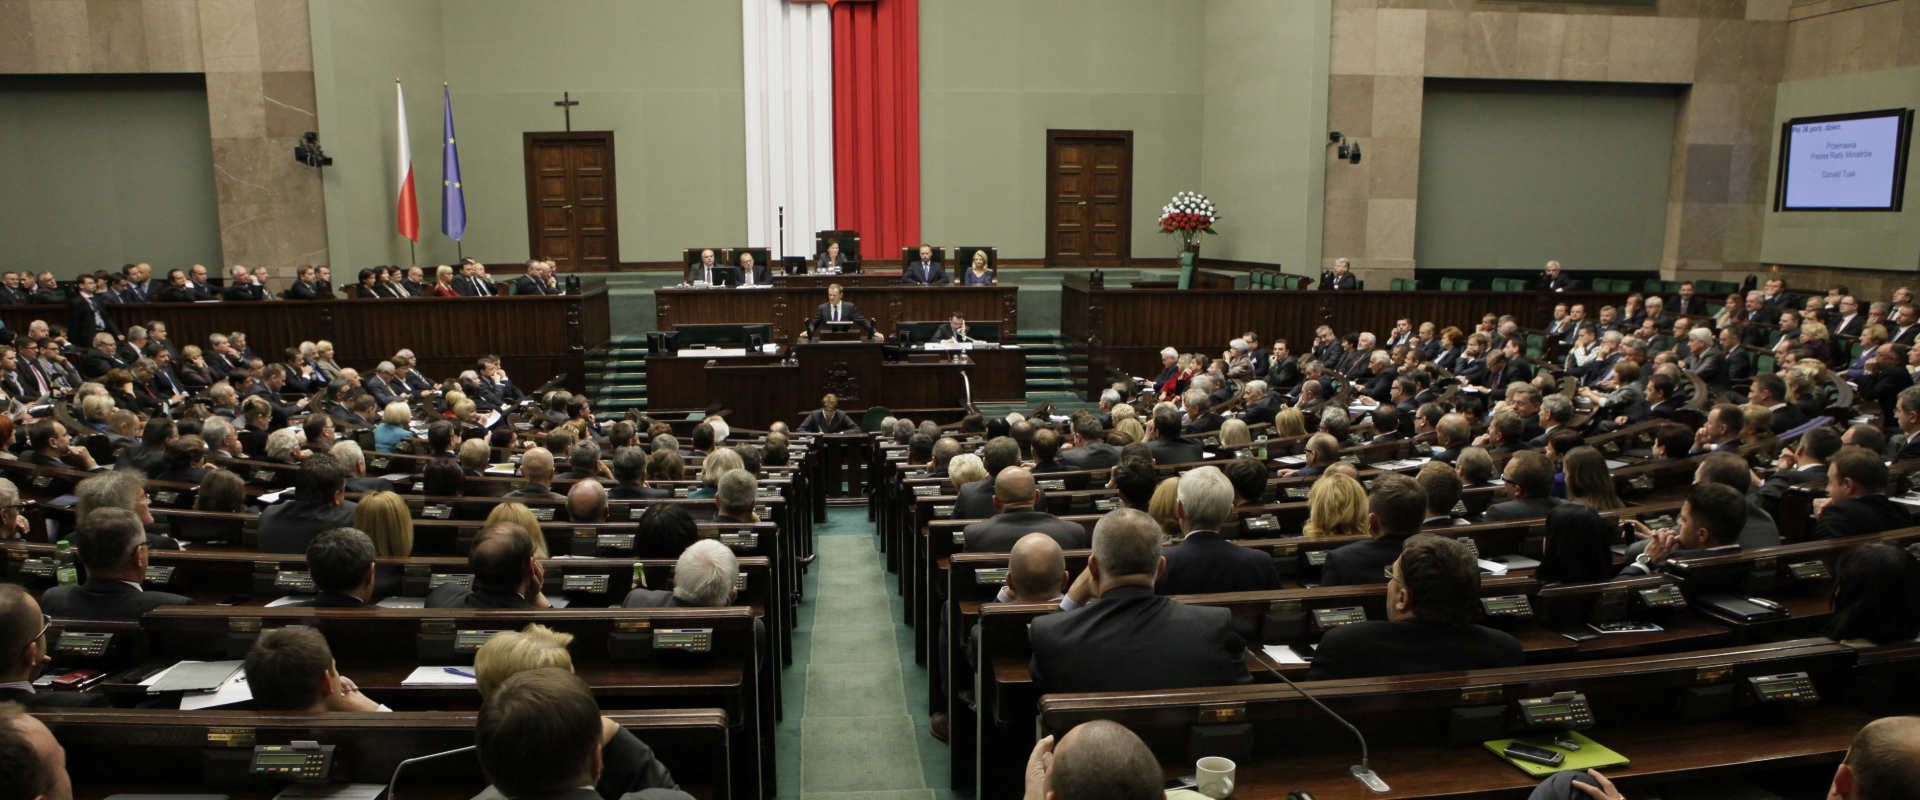 הפרלמנט בפולין, 2013